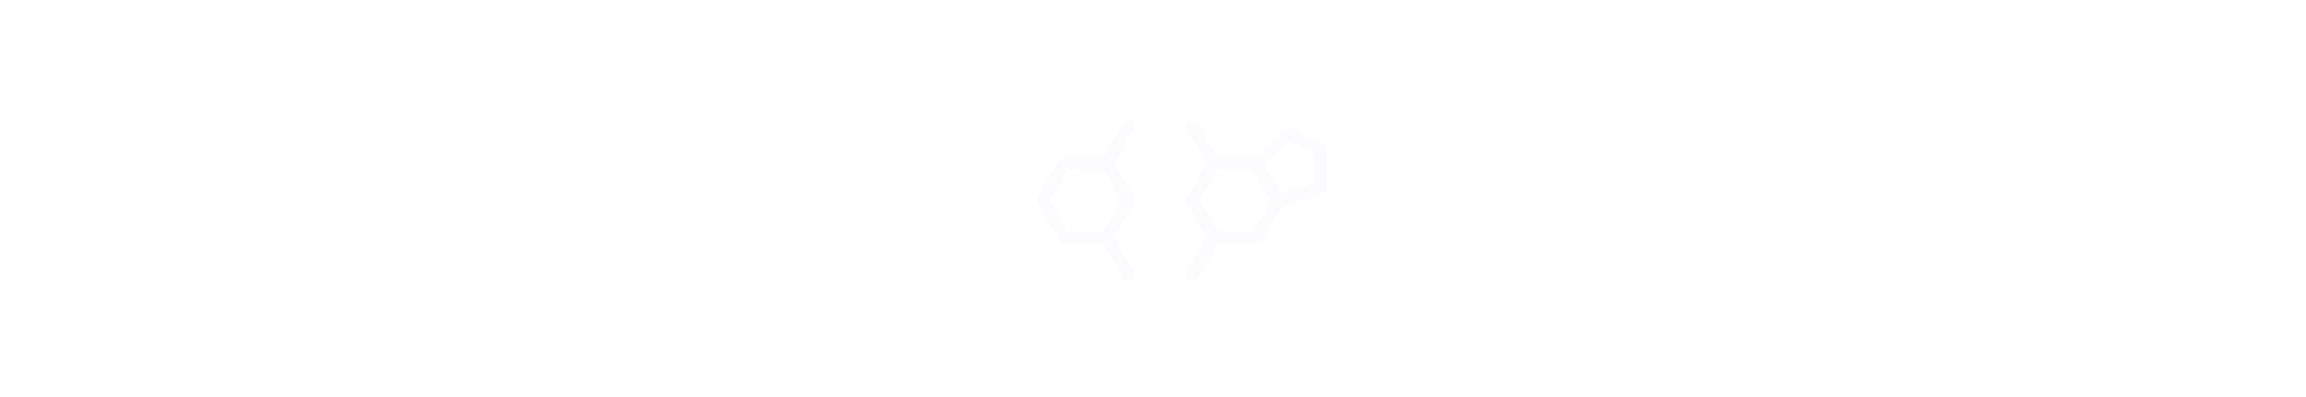 critical genomics Logo, Guanin und Cytosin als Base